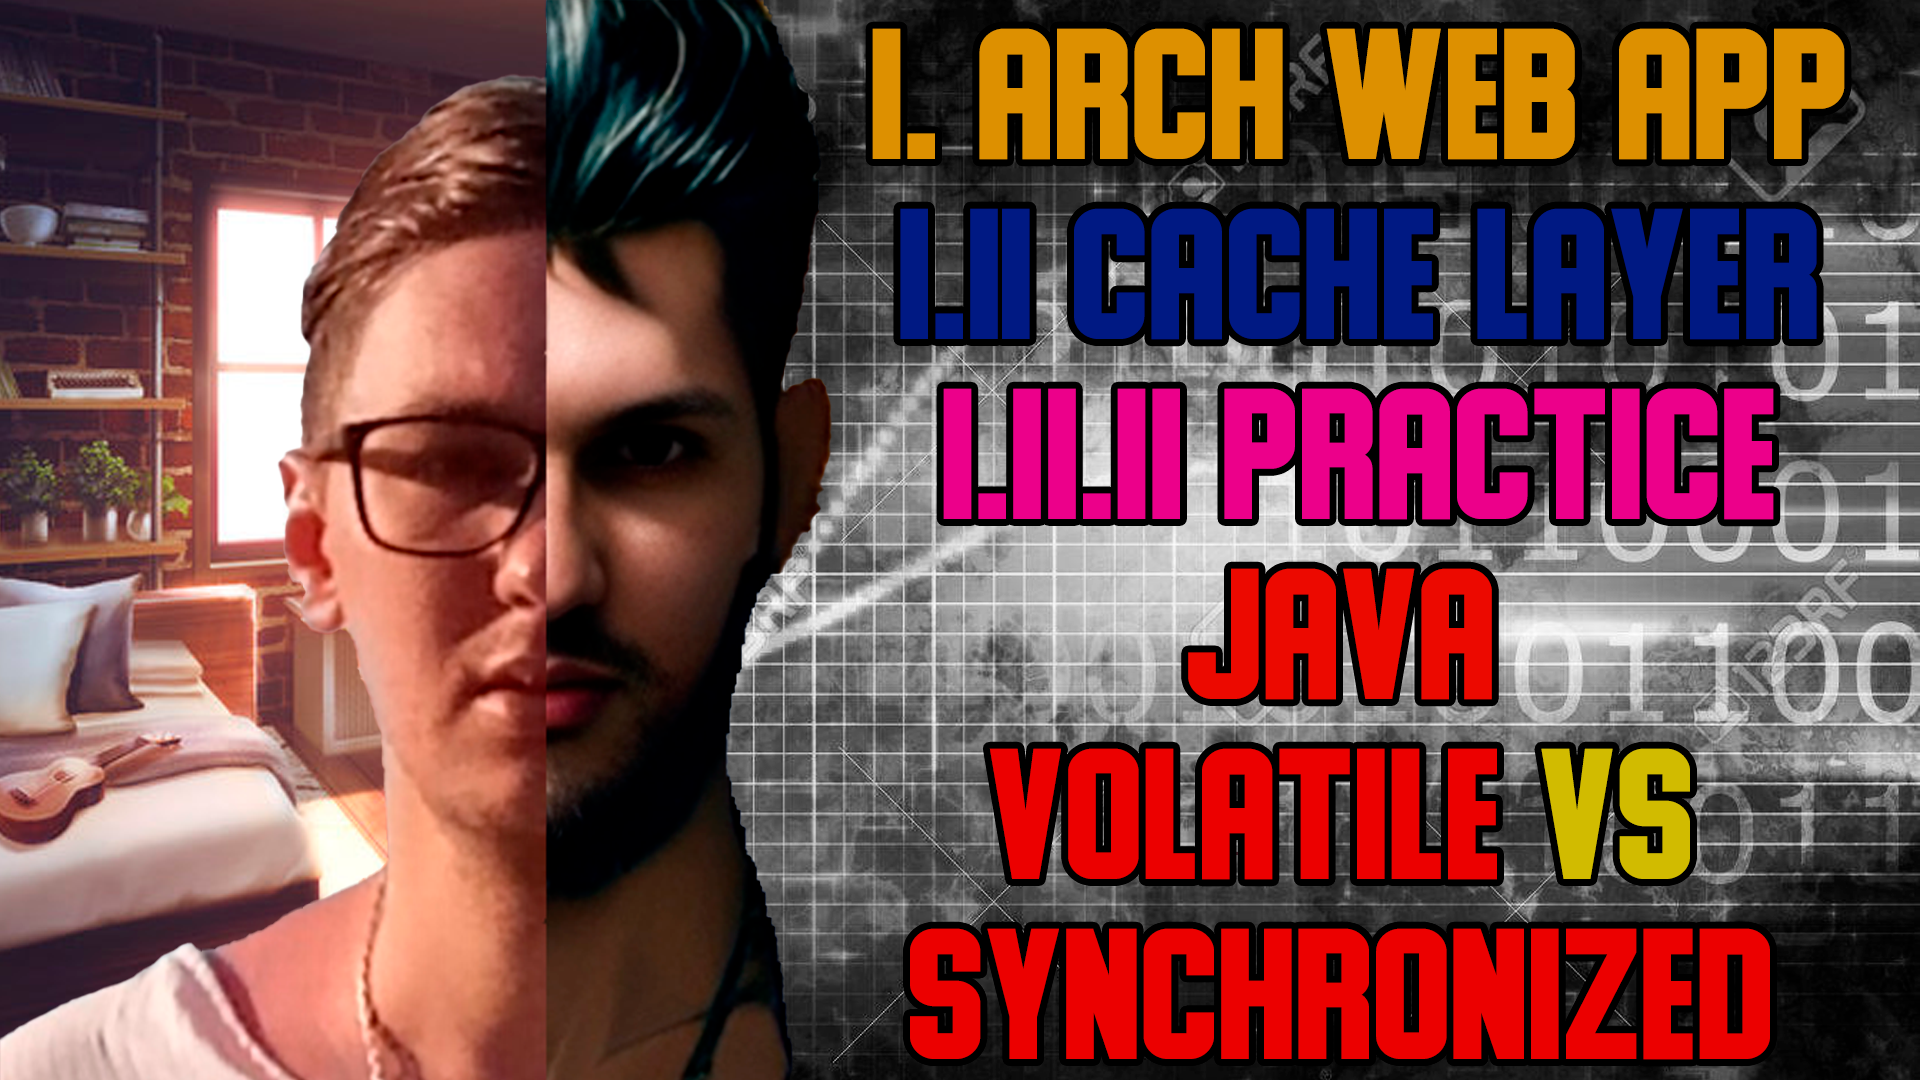 I. Architecture web app I.II Cache layer I.II.II Practice - Java Volatile vs Synchronized